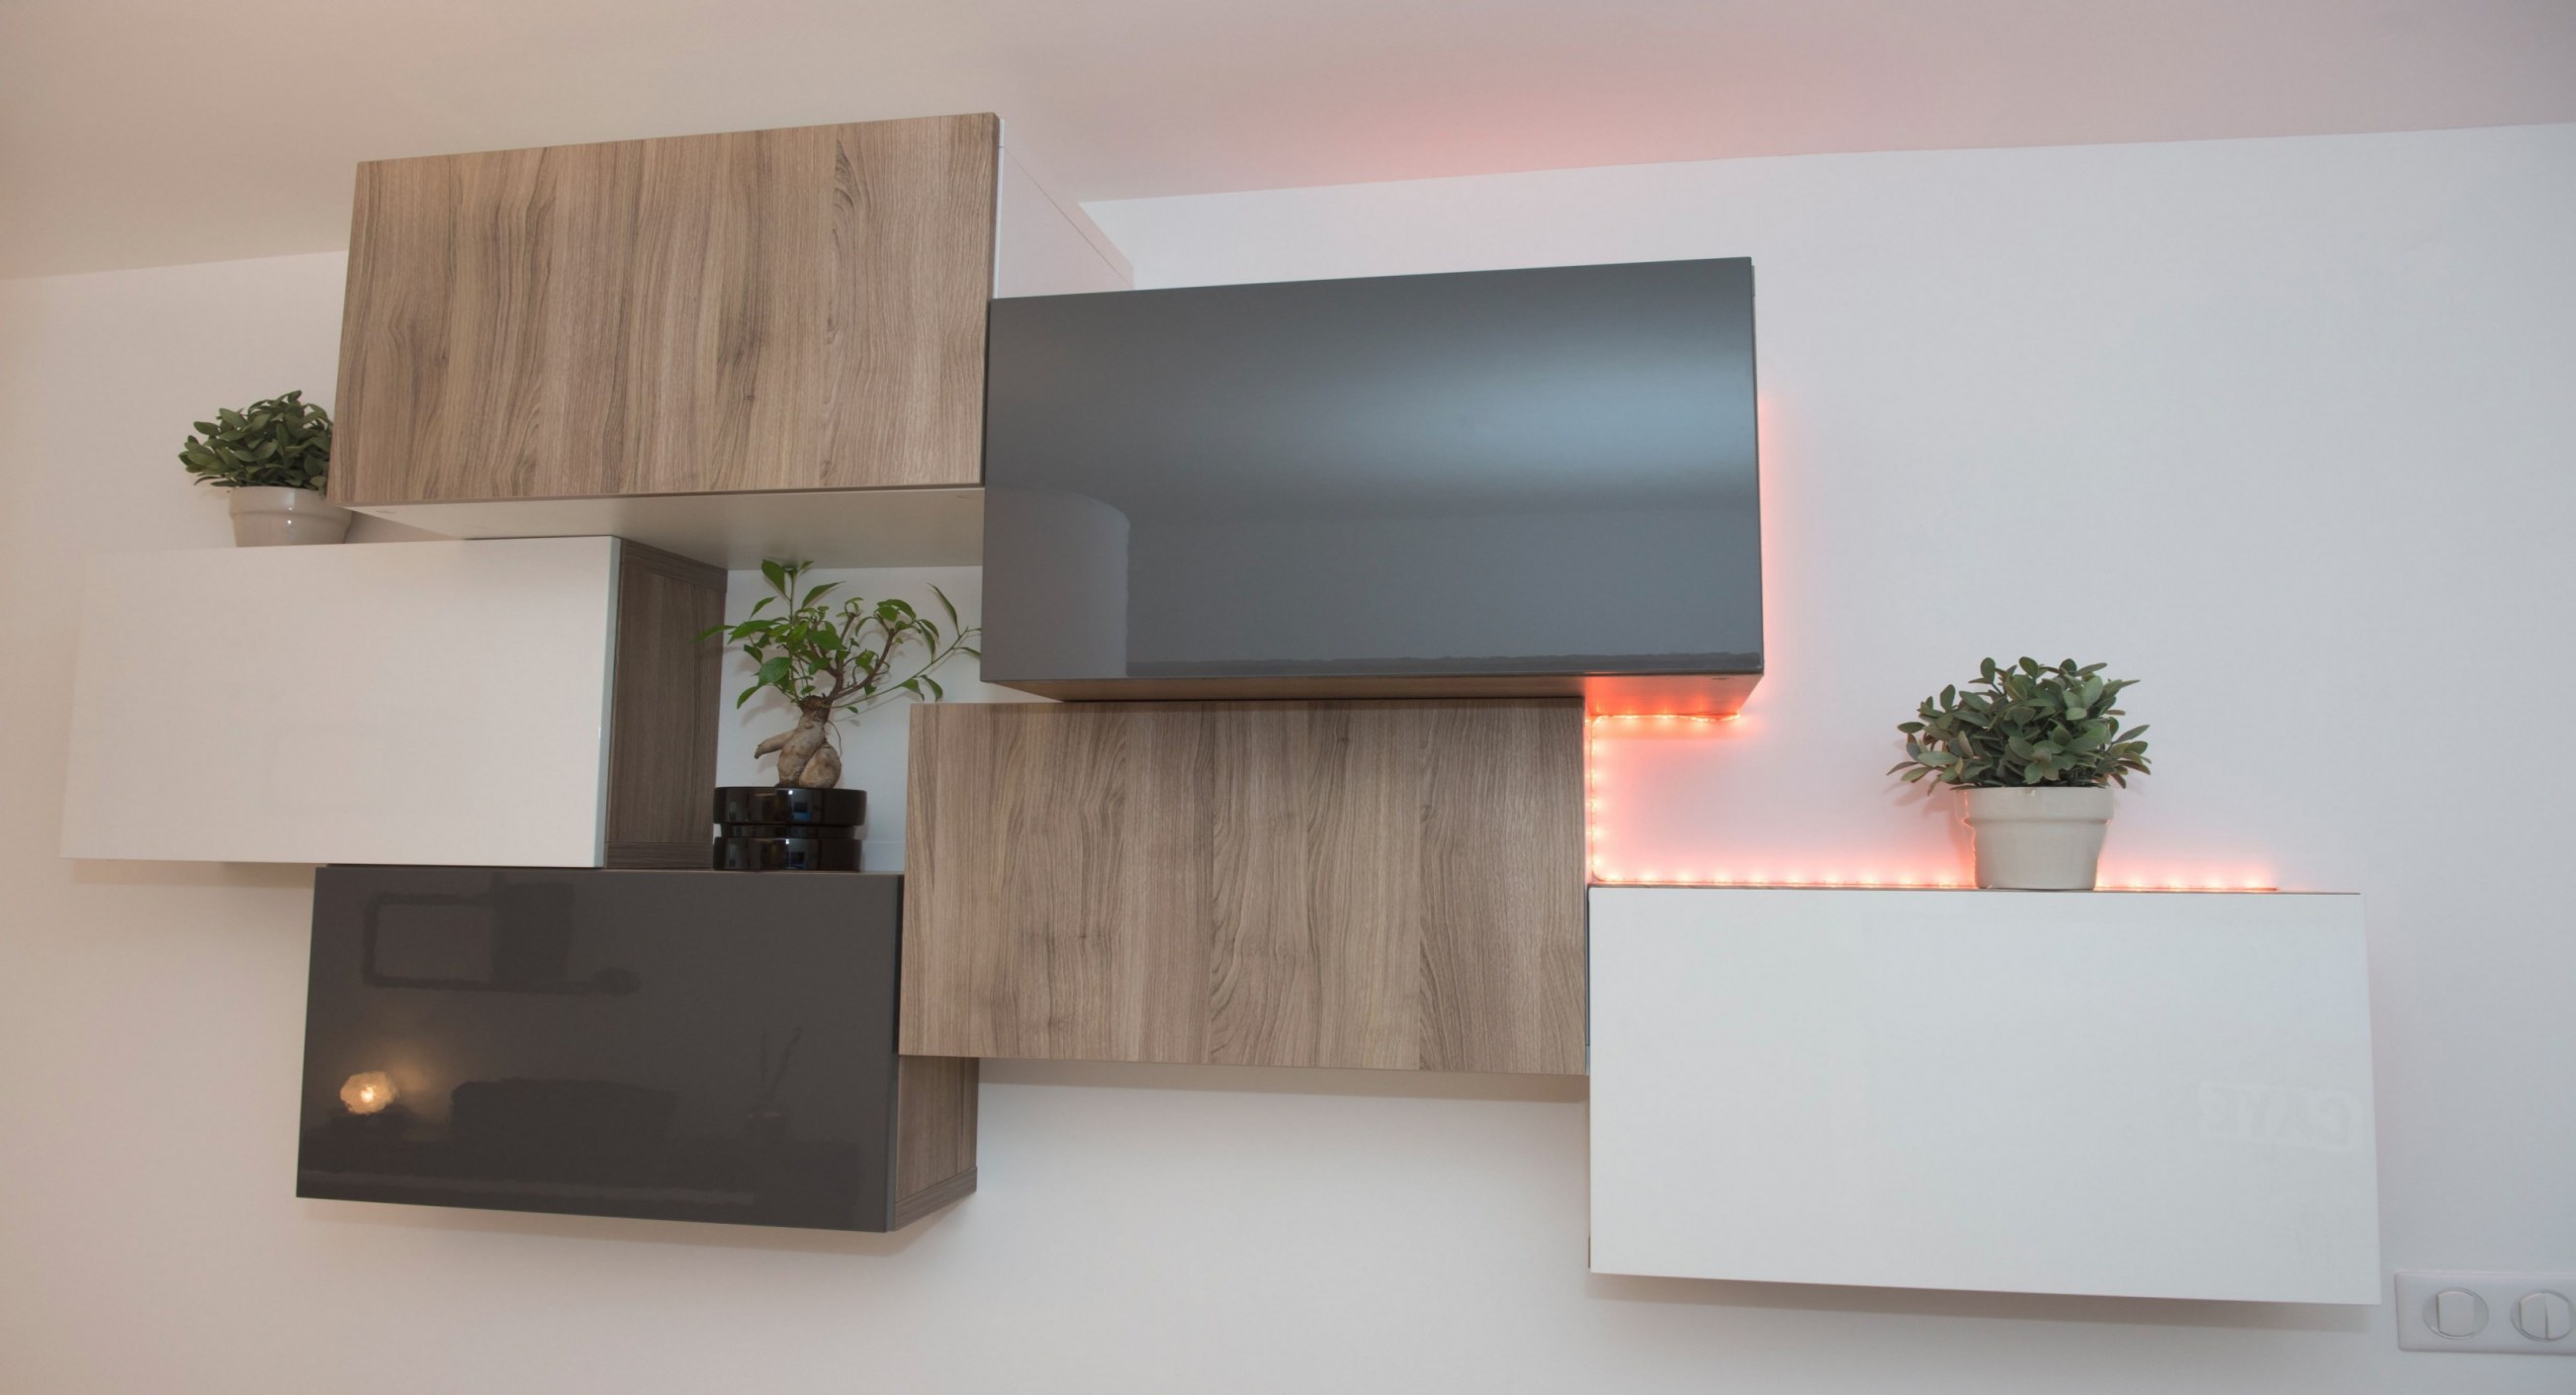 Black Fireplace Tv Stand Beautiful Ikea Furniture Tv Stand Faux Fireplace Ideas Tv Console